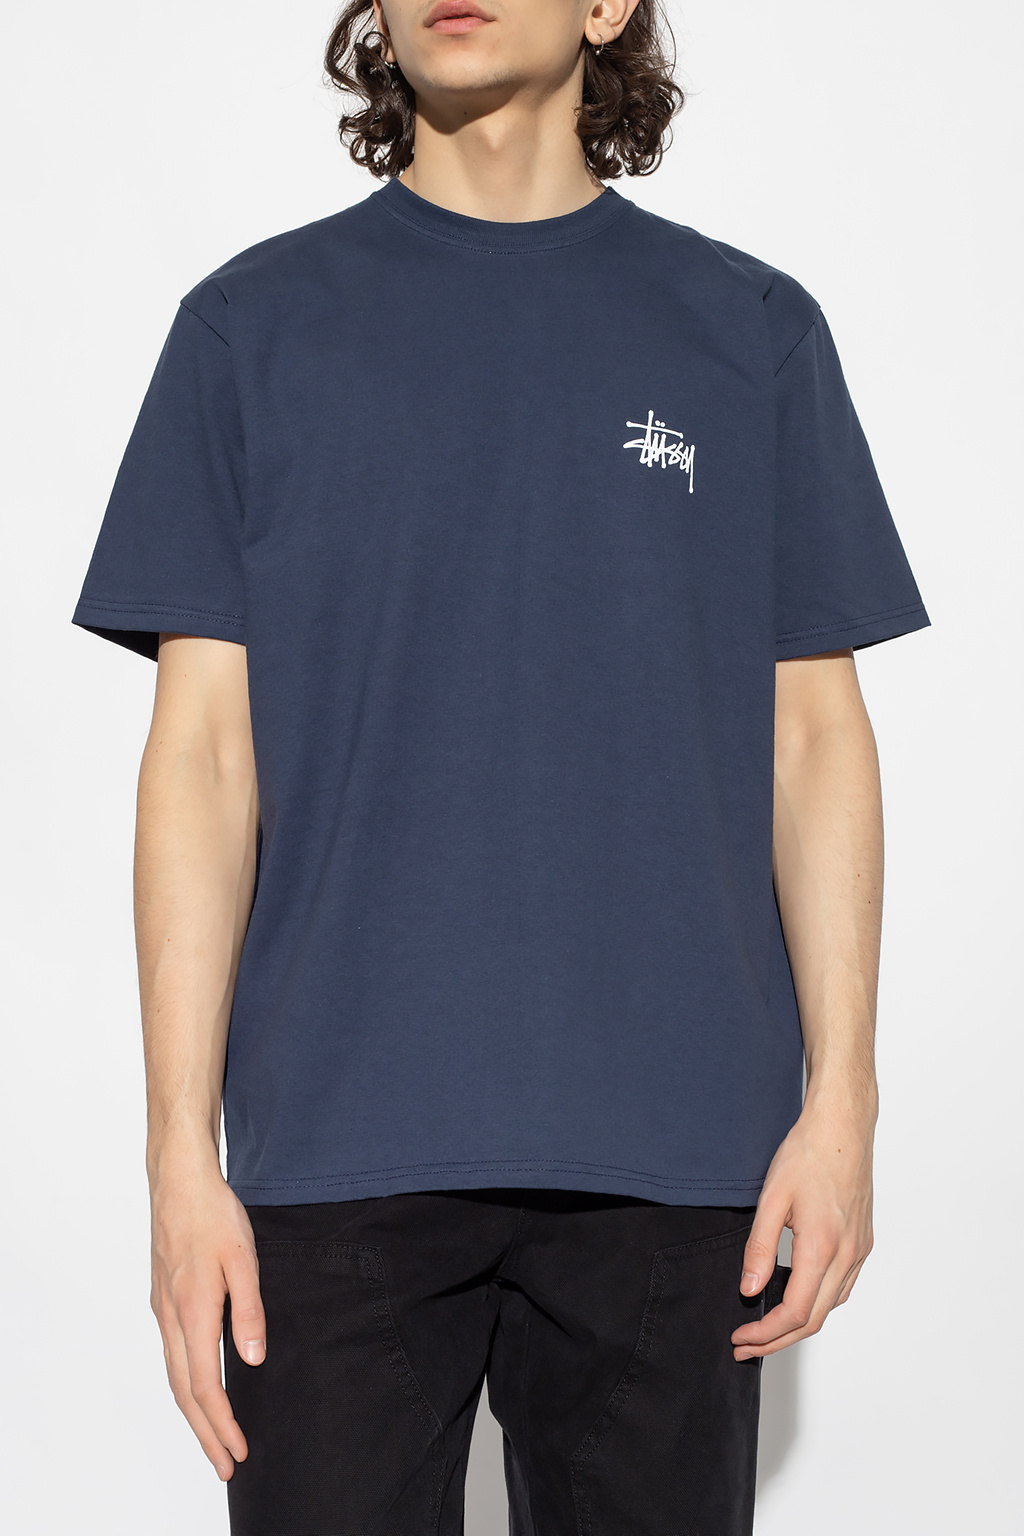 Stussy×Rick Owens T-shirt XL drkshdw - トップス